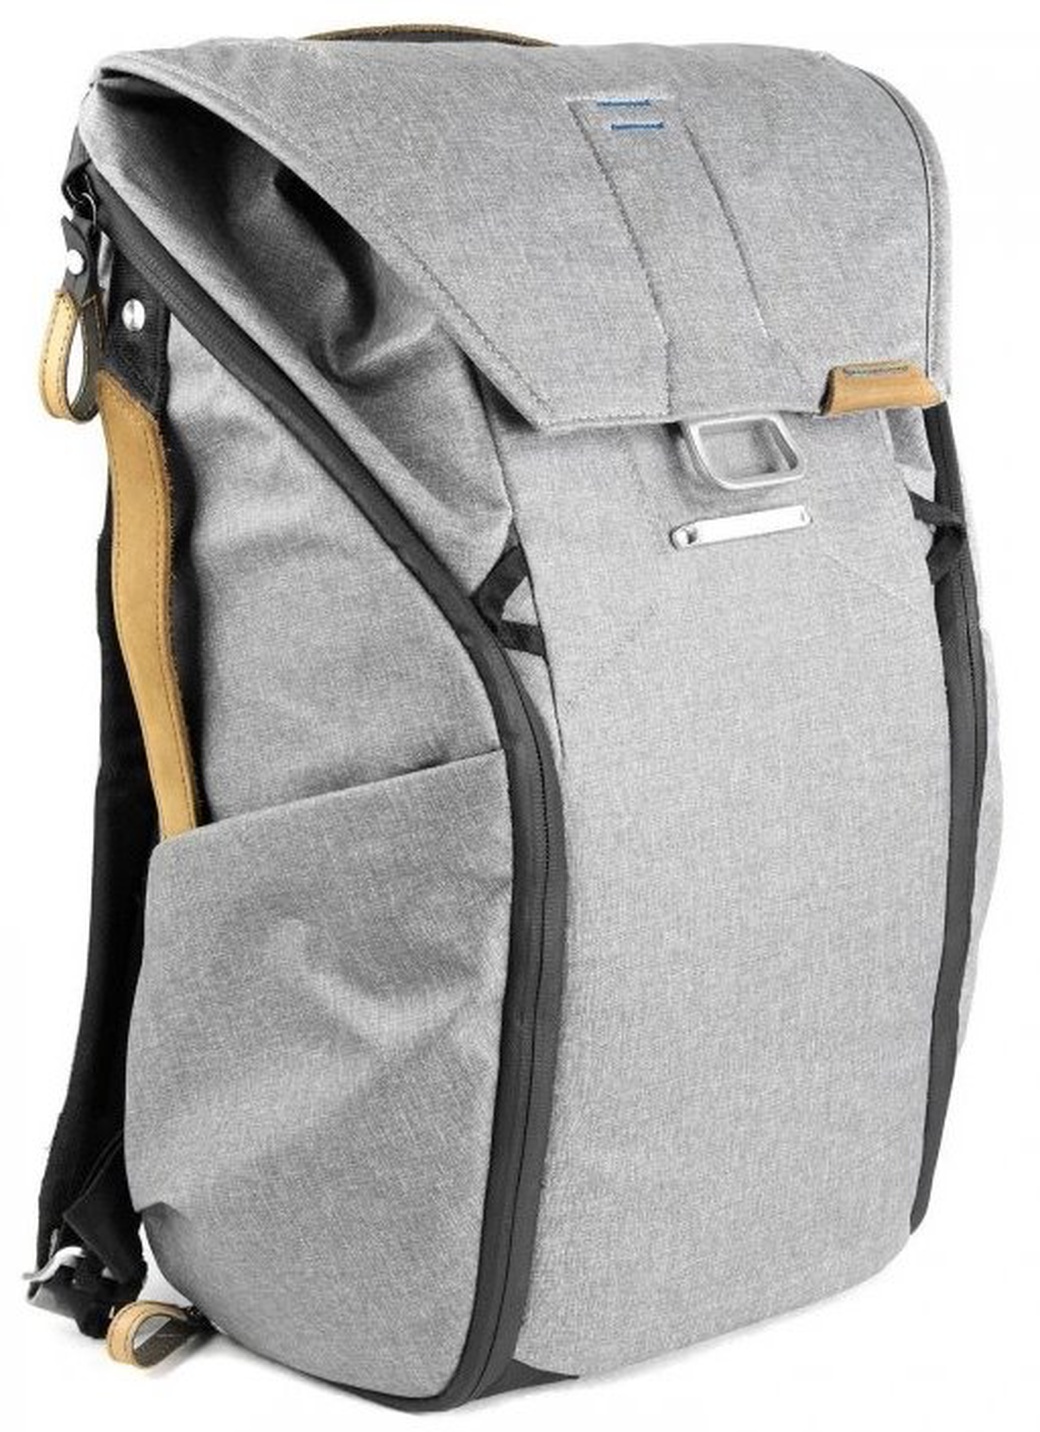 Рюкзак Peak Design Everyday Backpack 20L Ash, серый фото